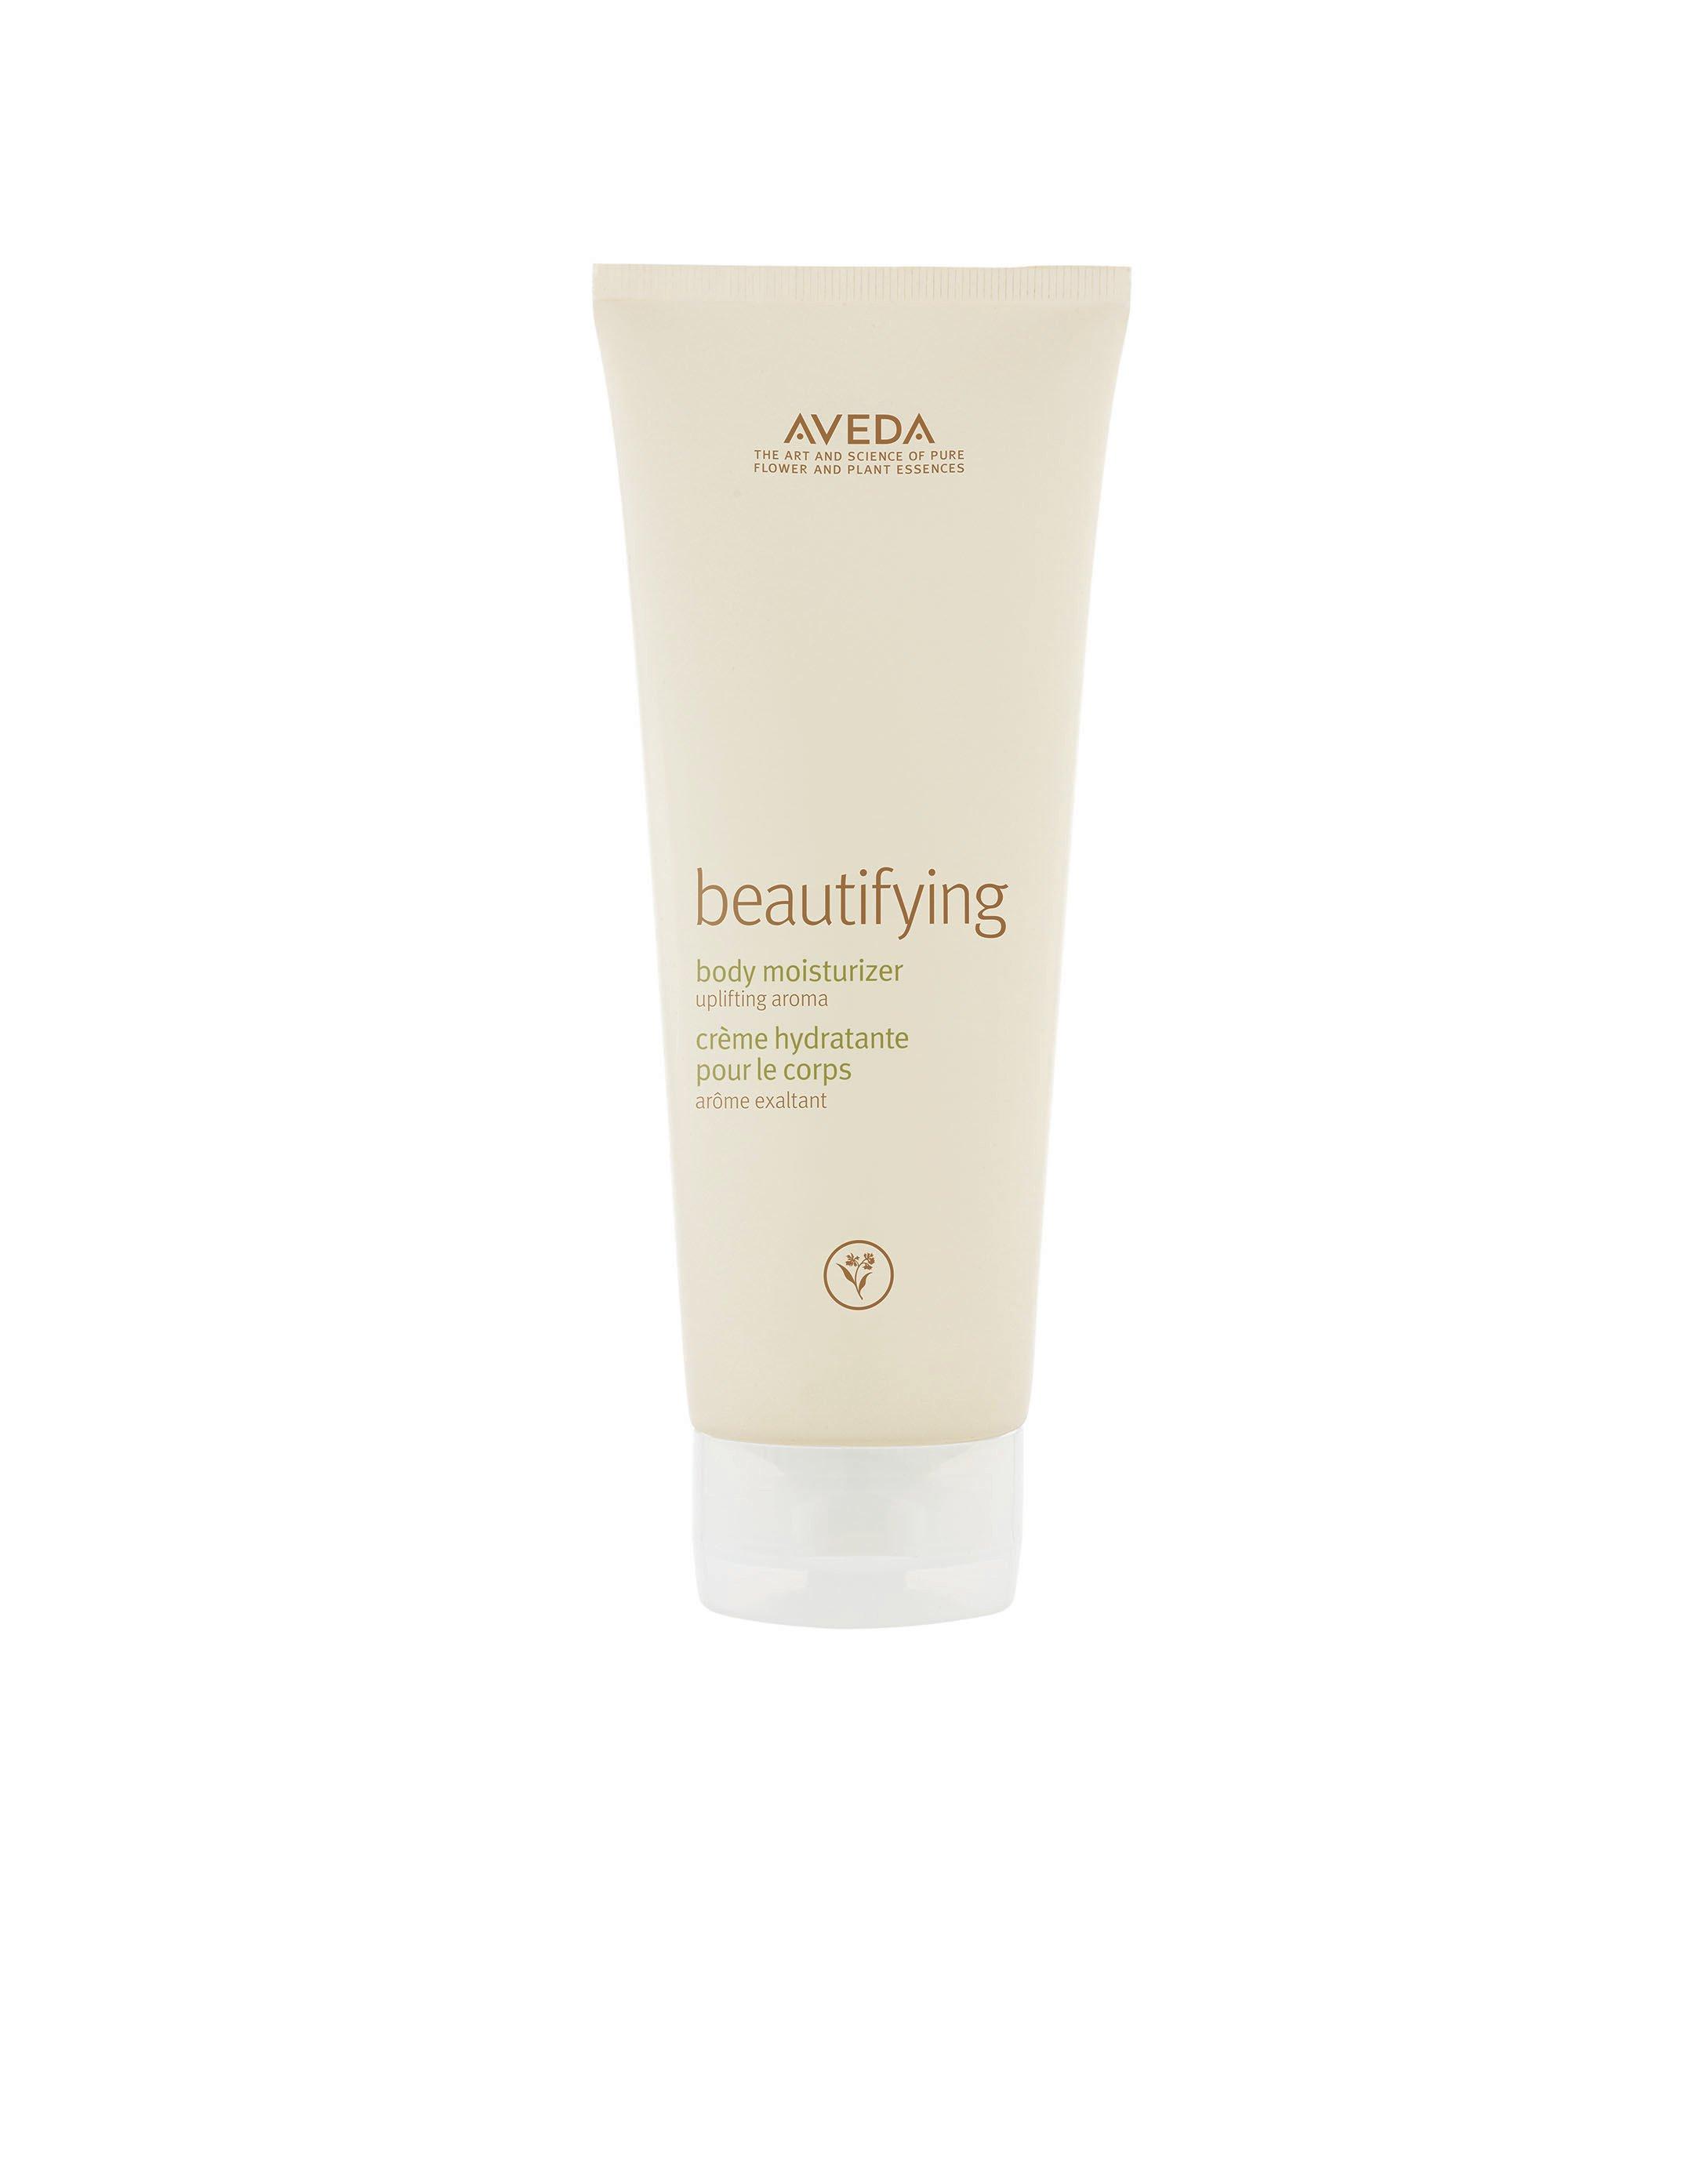 Image of AVEDA Beautifying body moisturizer - 200ml